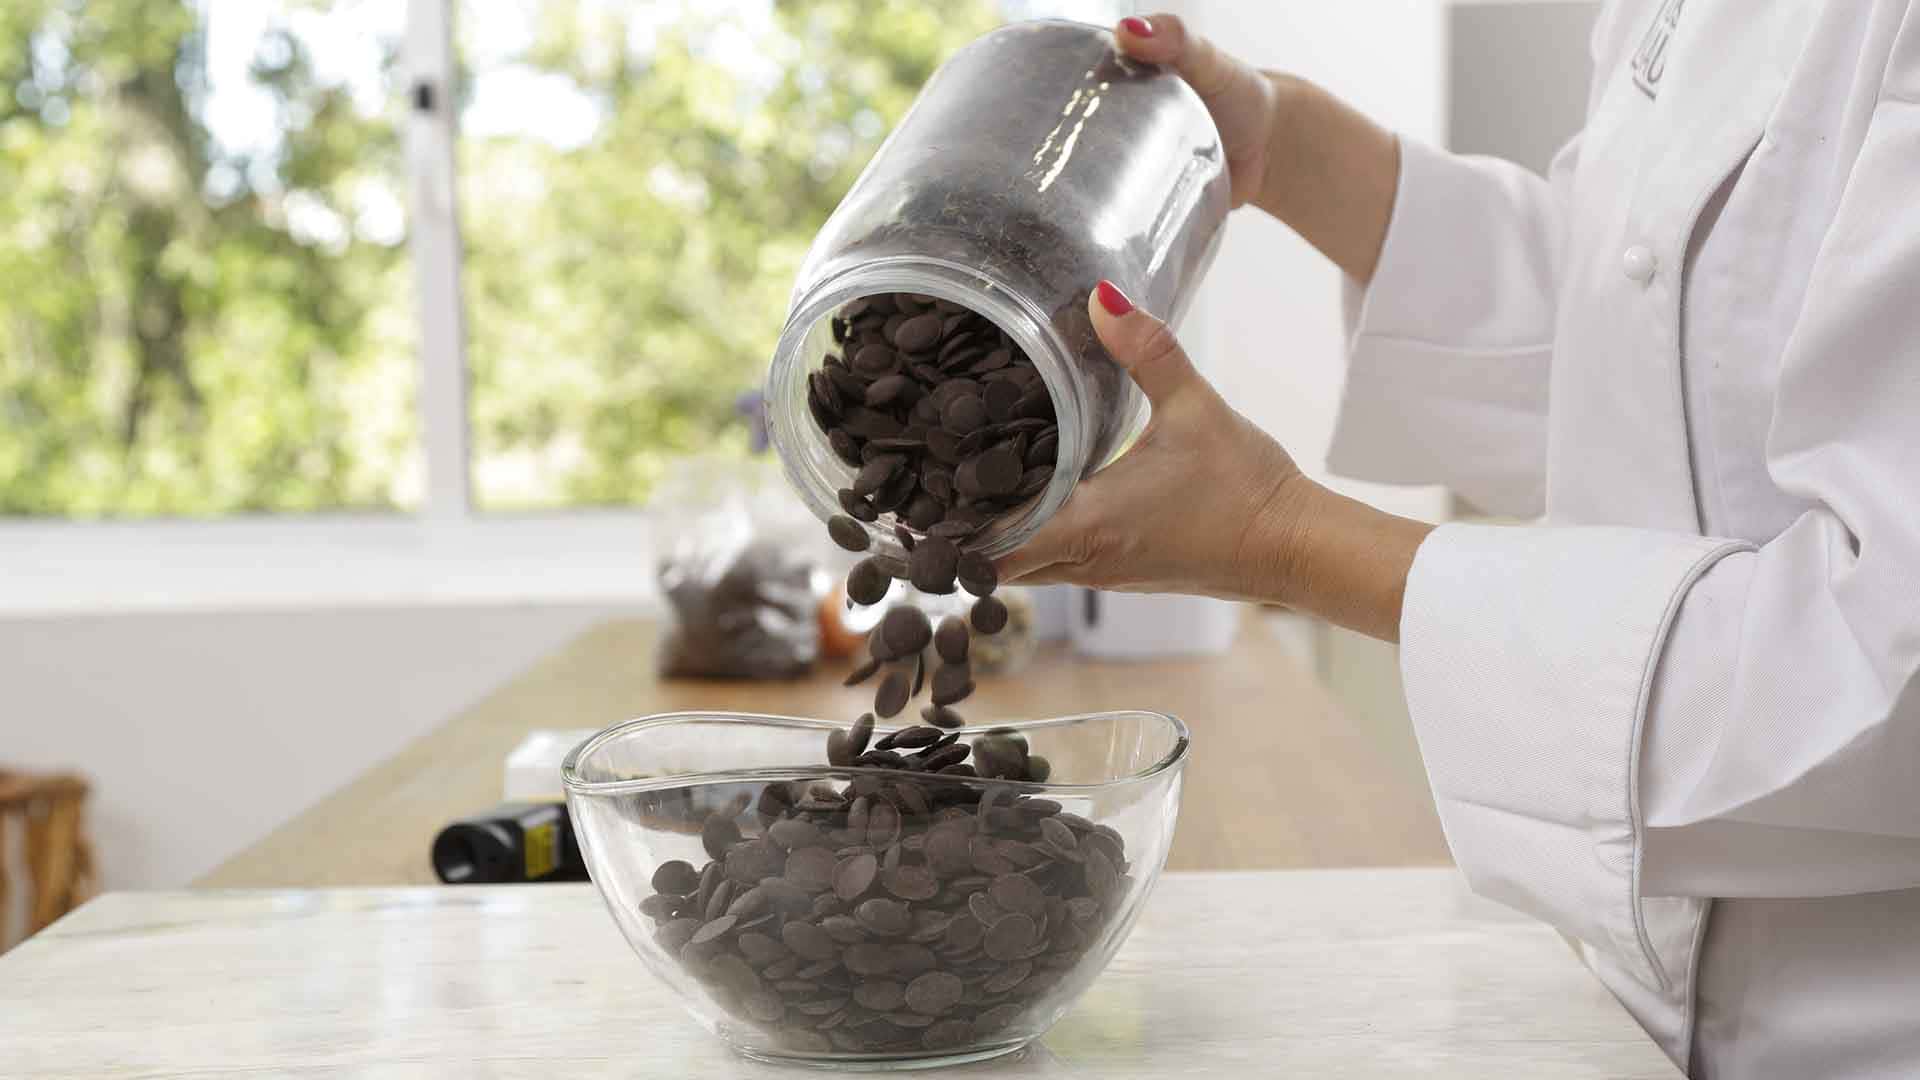 Chocolatier Vs Fabricante de Chocolate ( “Chocolate Maker” )